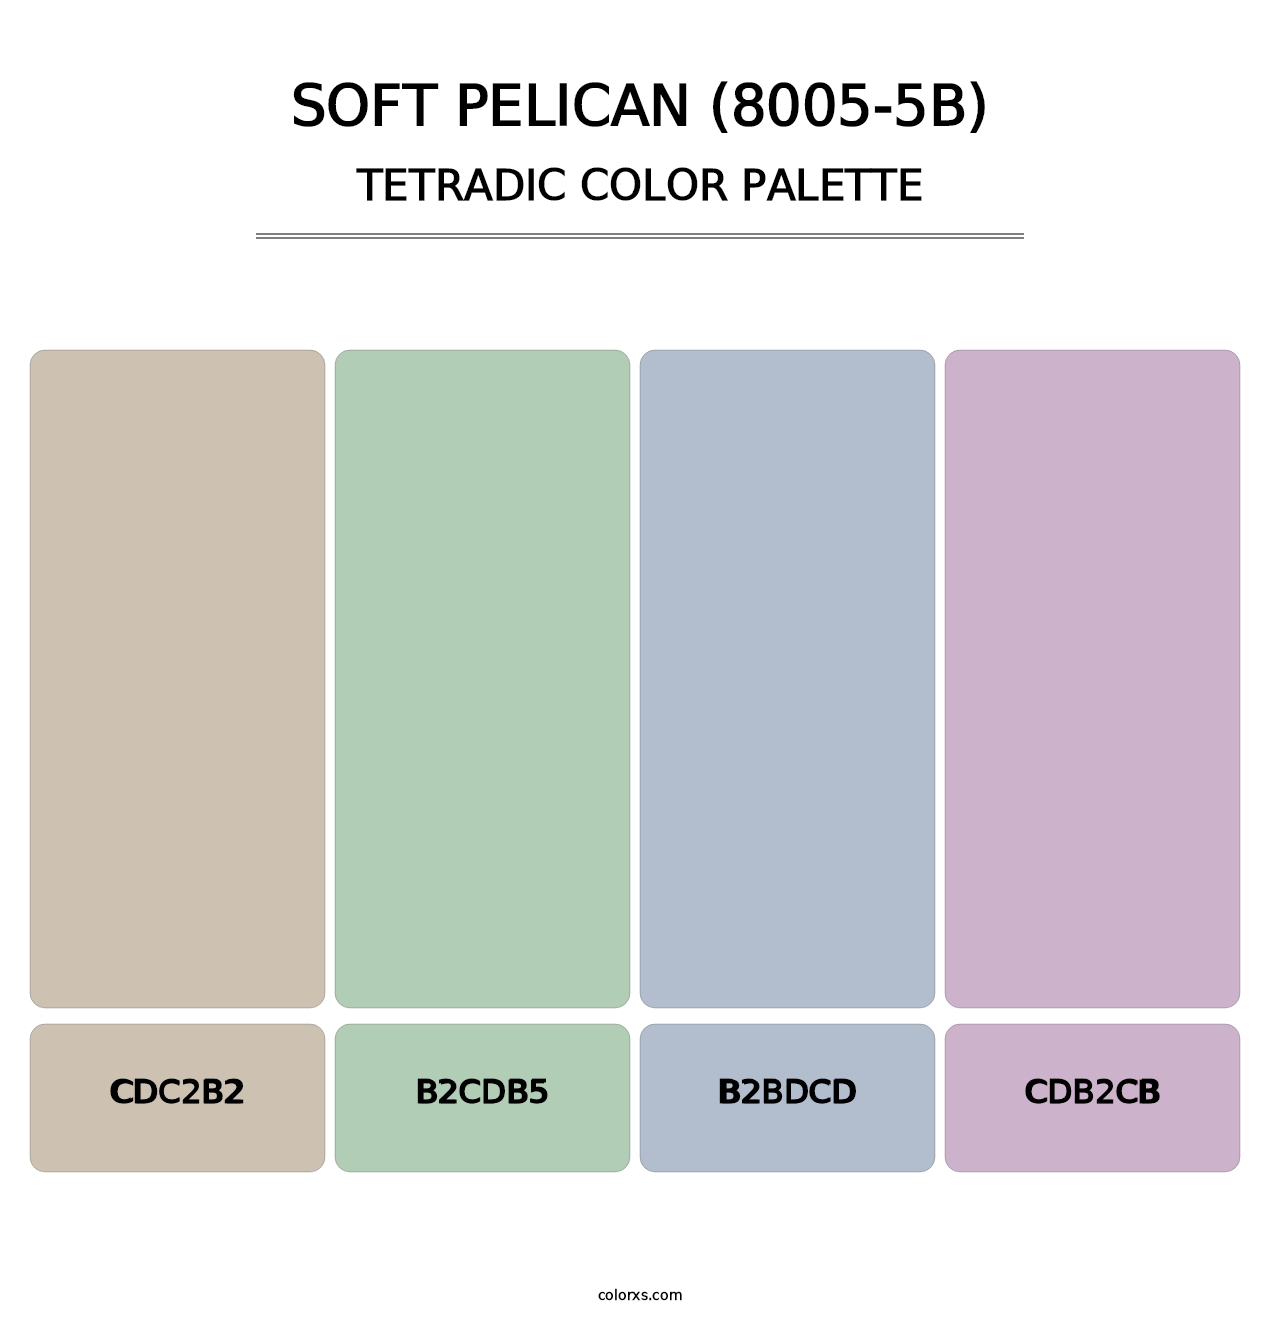 Soft Pelican (8005-5B) - Tetradic Color Palette